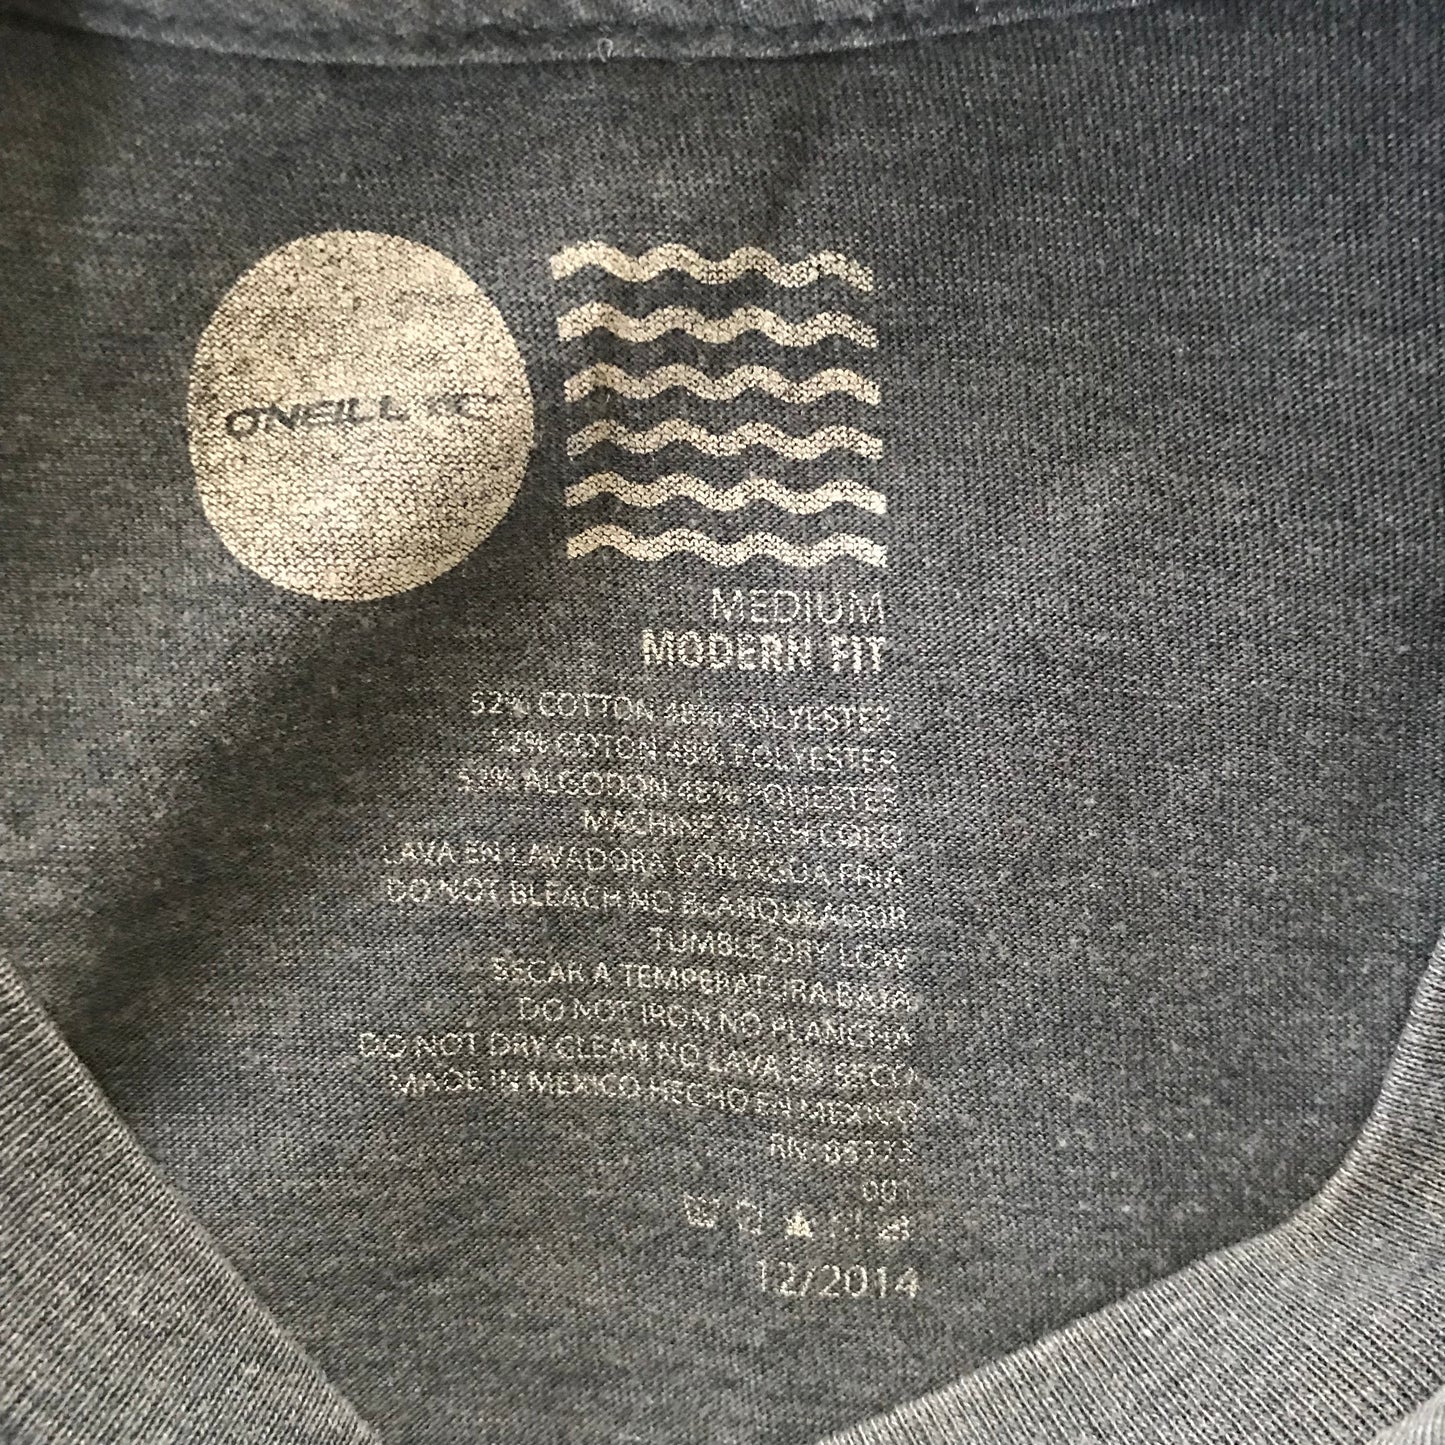 O'Neill Gray Cotton Surf Logo T Shirt